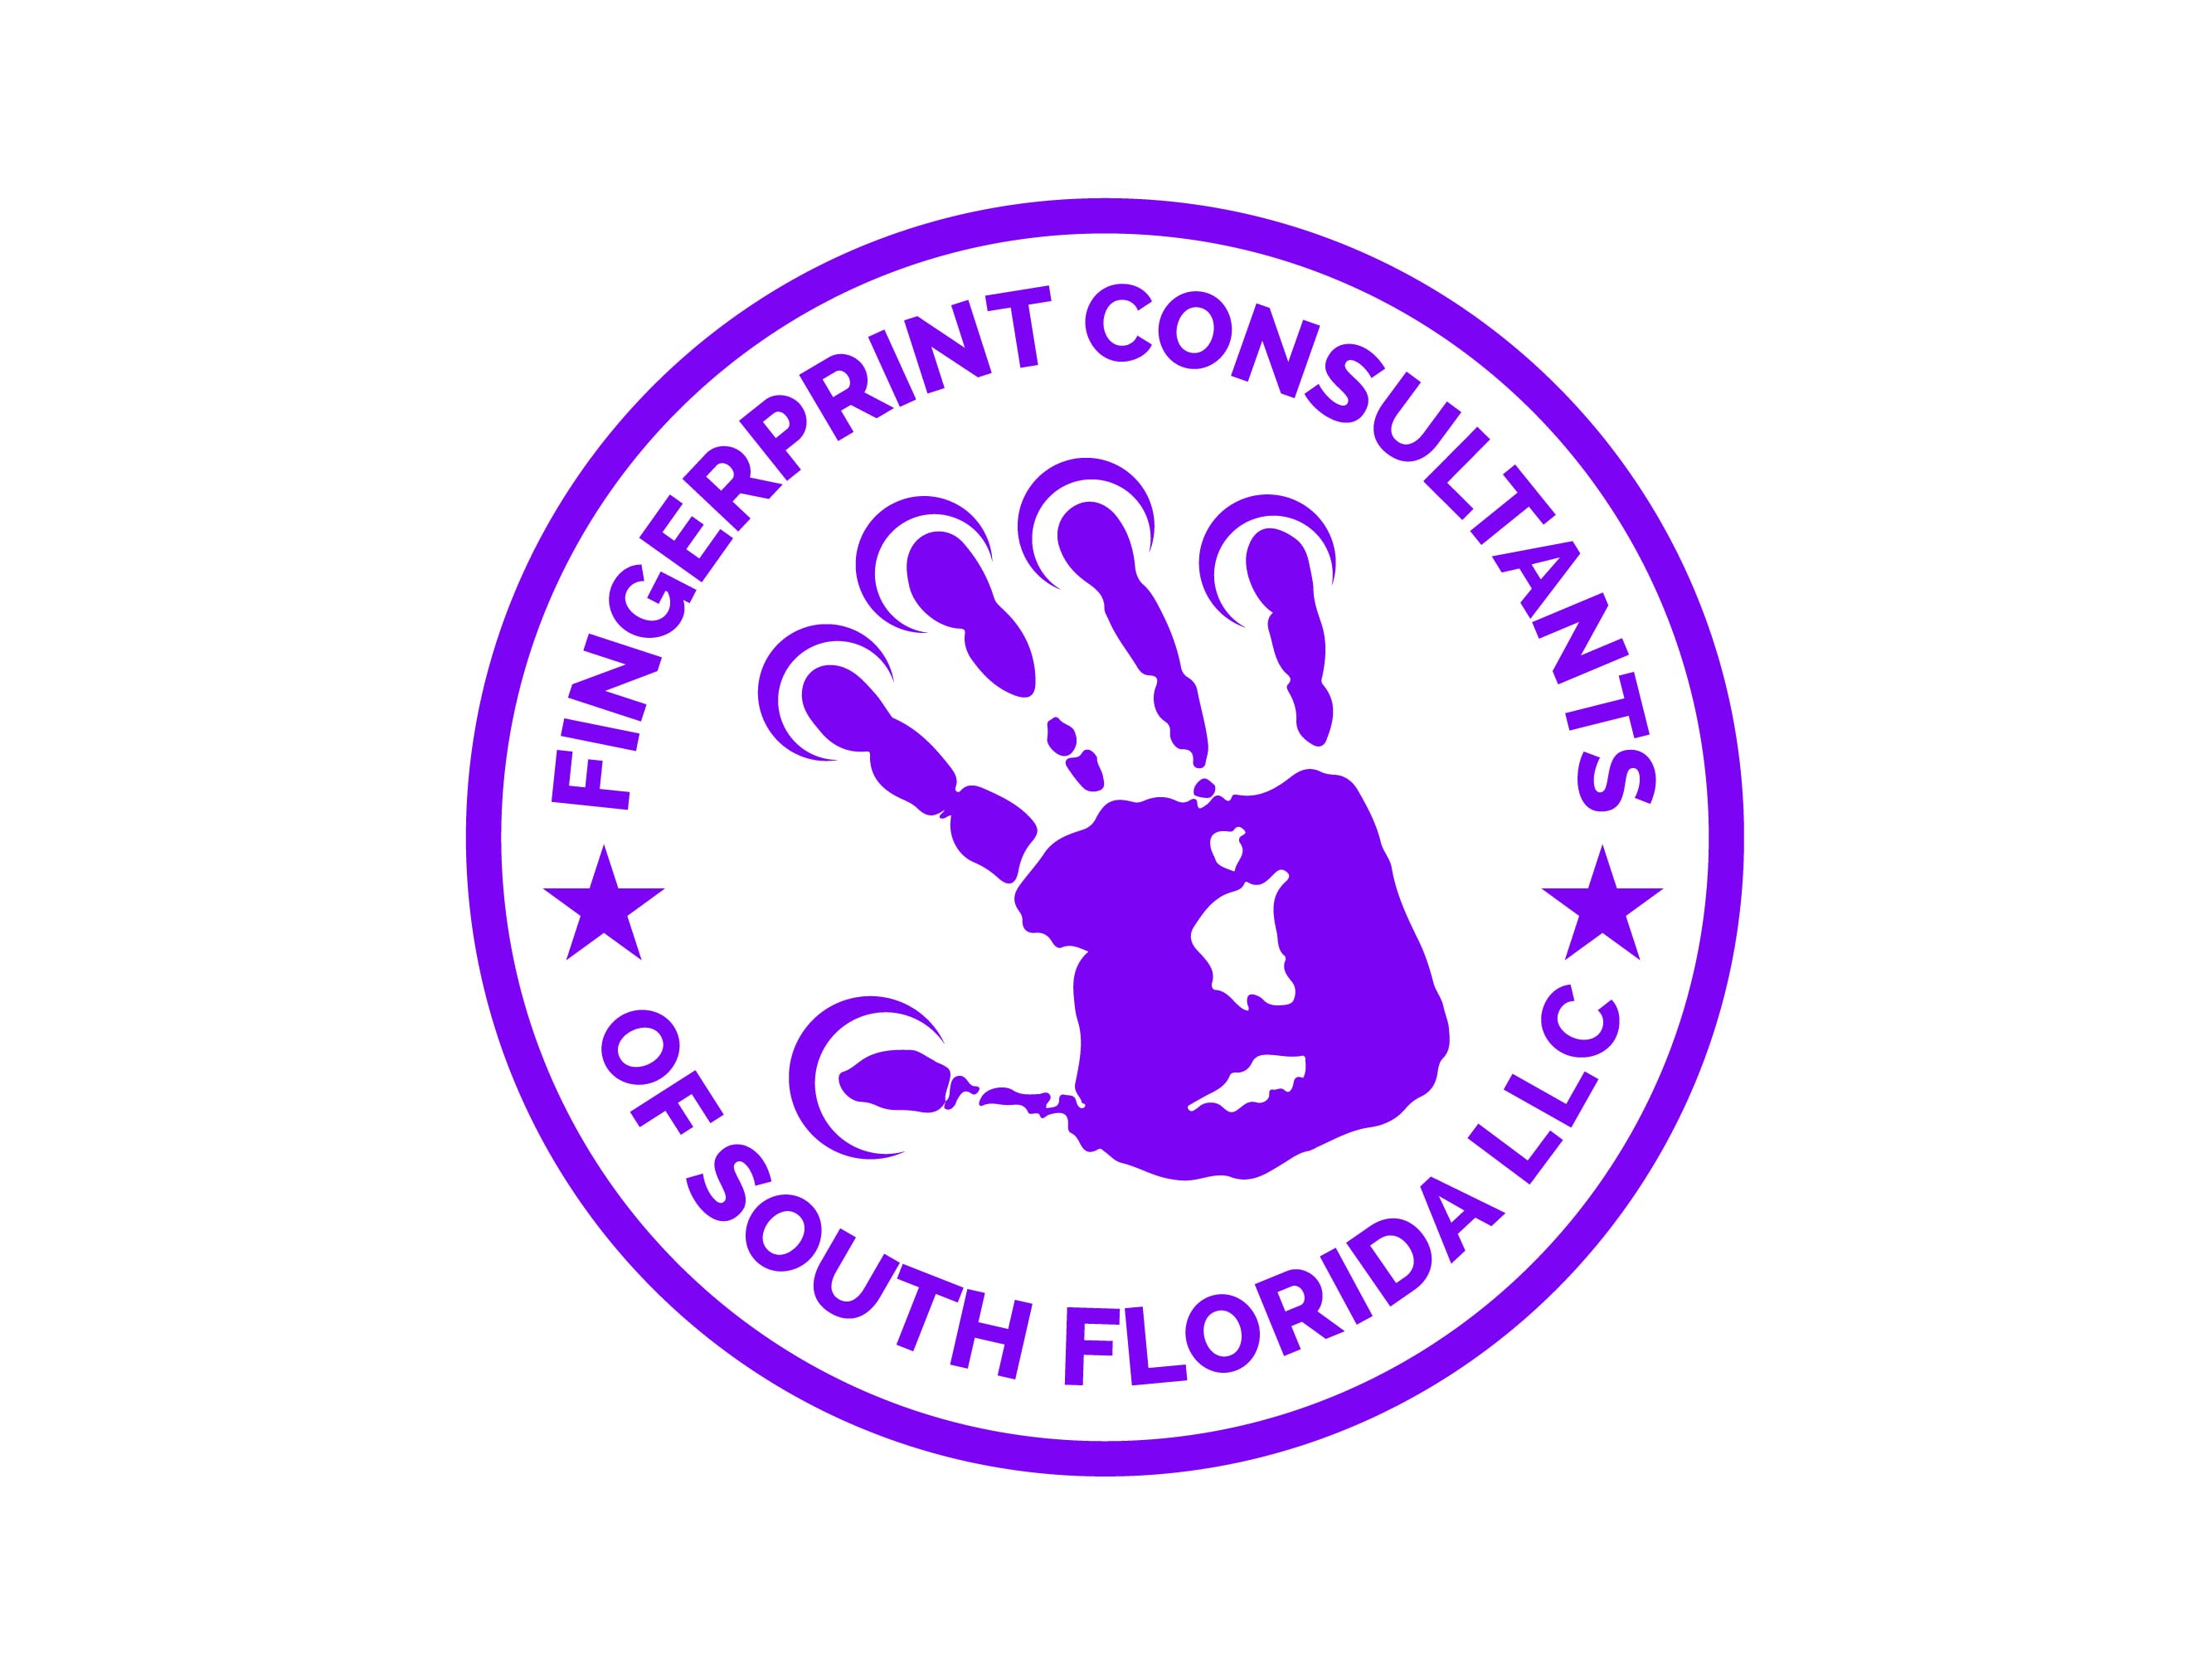 Fingerprint Consultants of South Florida LLC